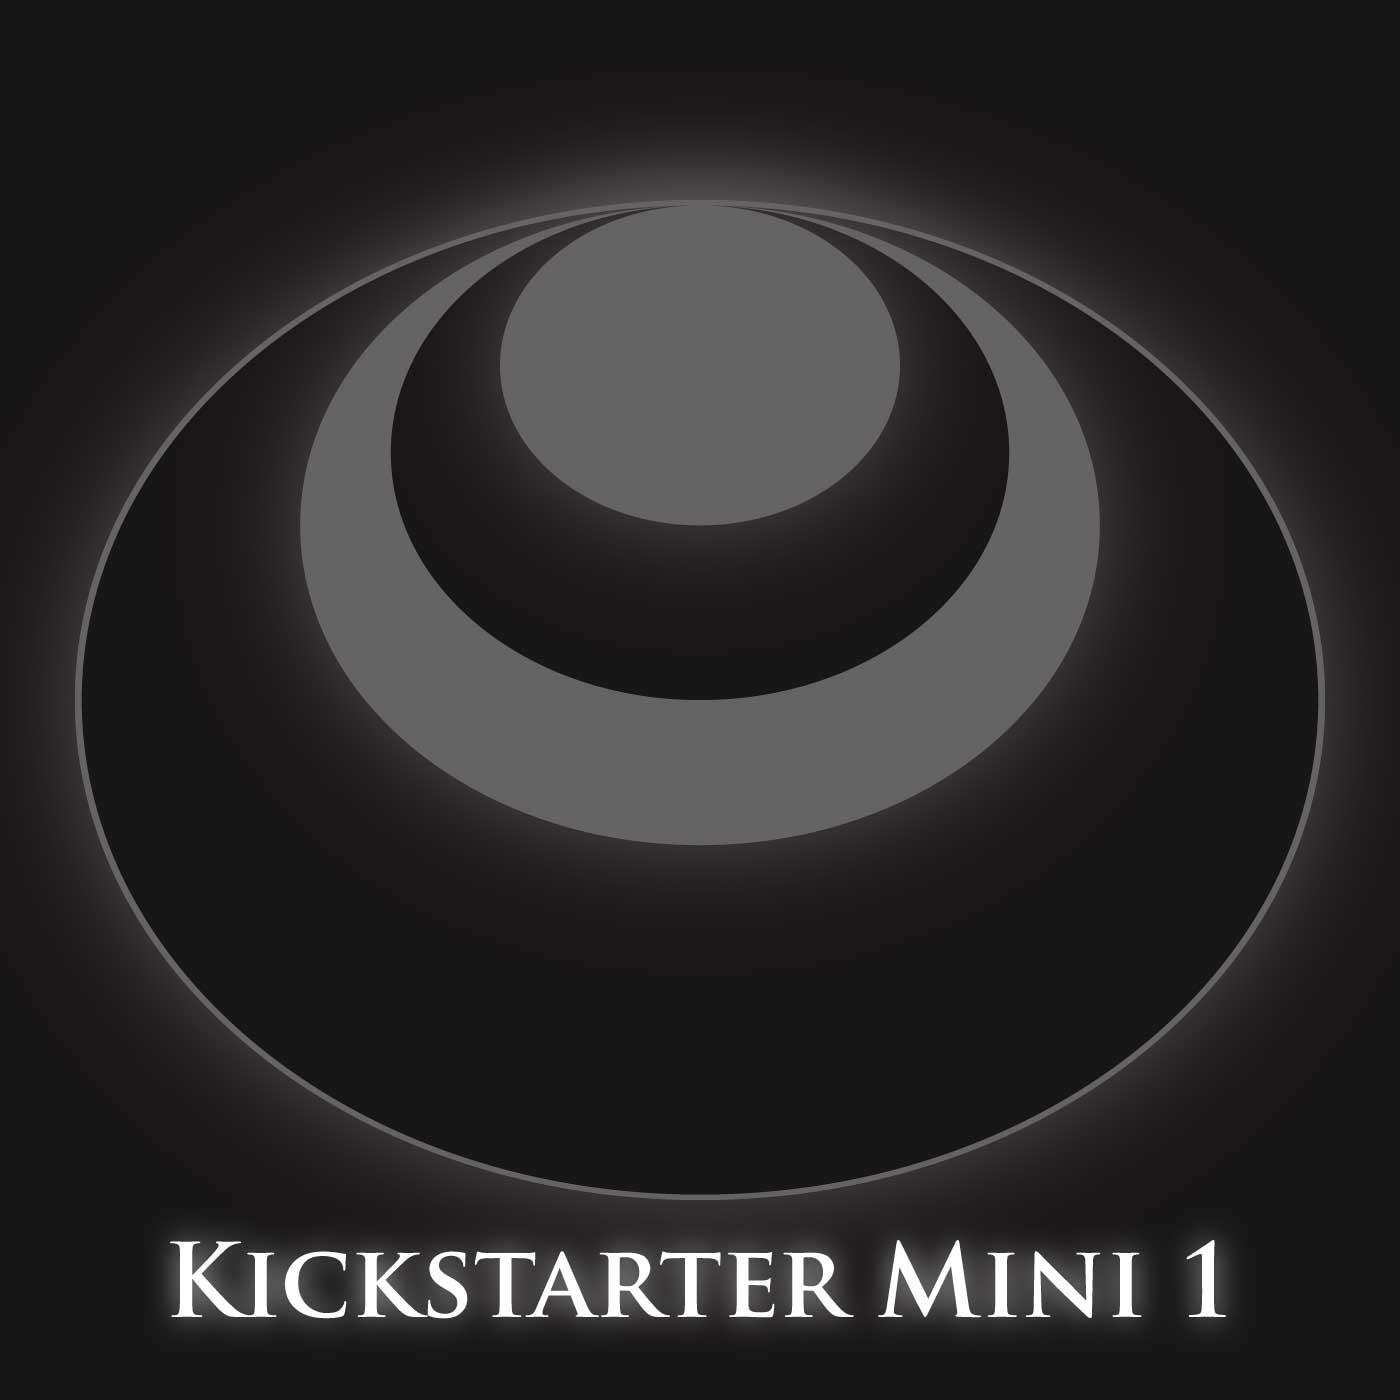 Kickstarter Mini 1